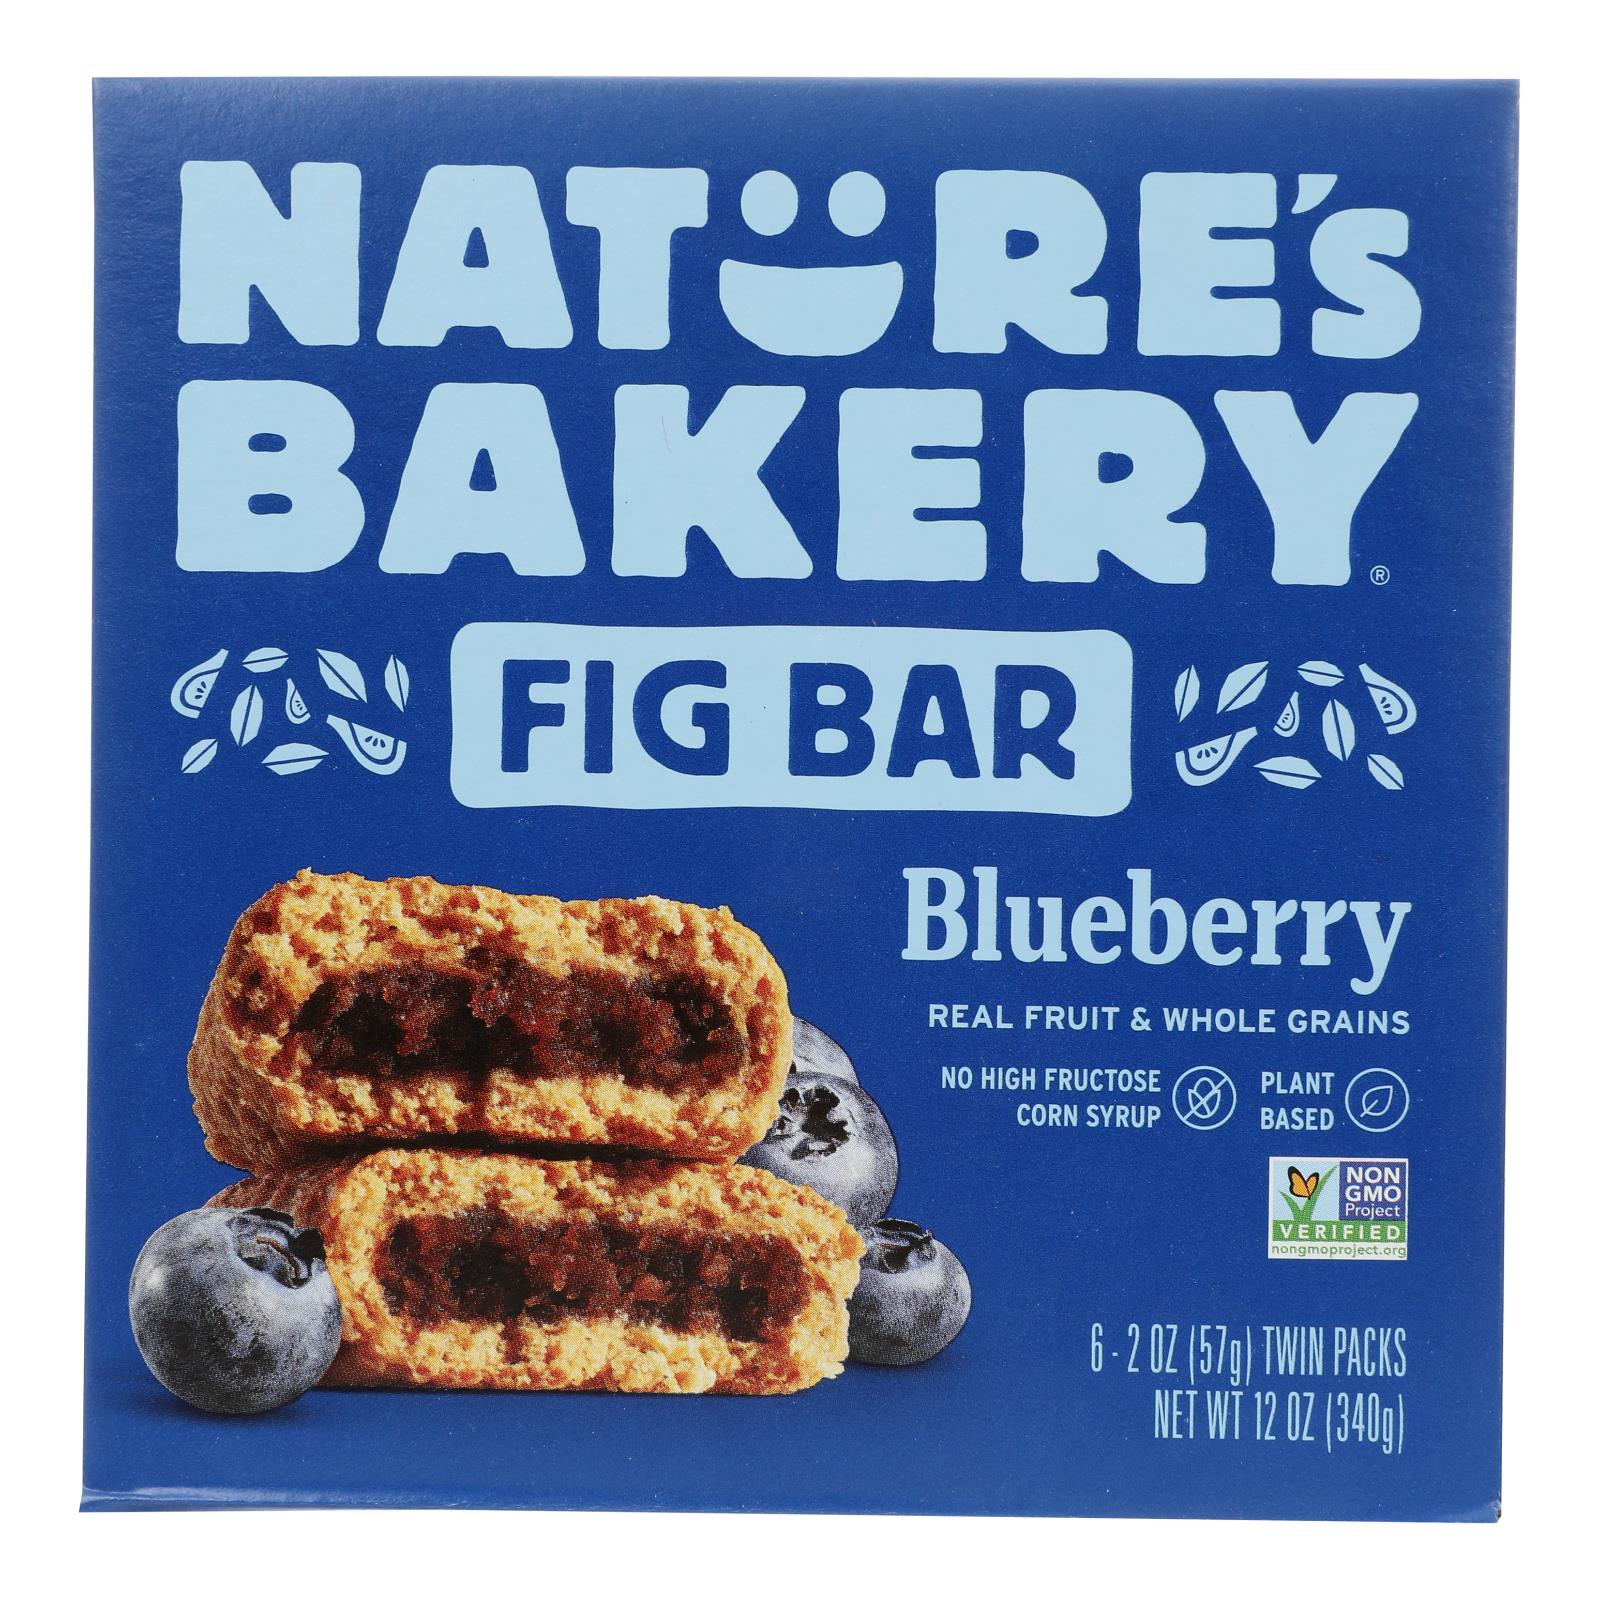 Nature's Bakery Stone Ground Whole Wheat Fig Bar - Blueberry - Case of 6 - 2 oz.